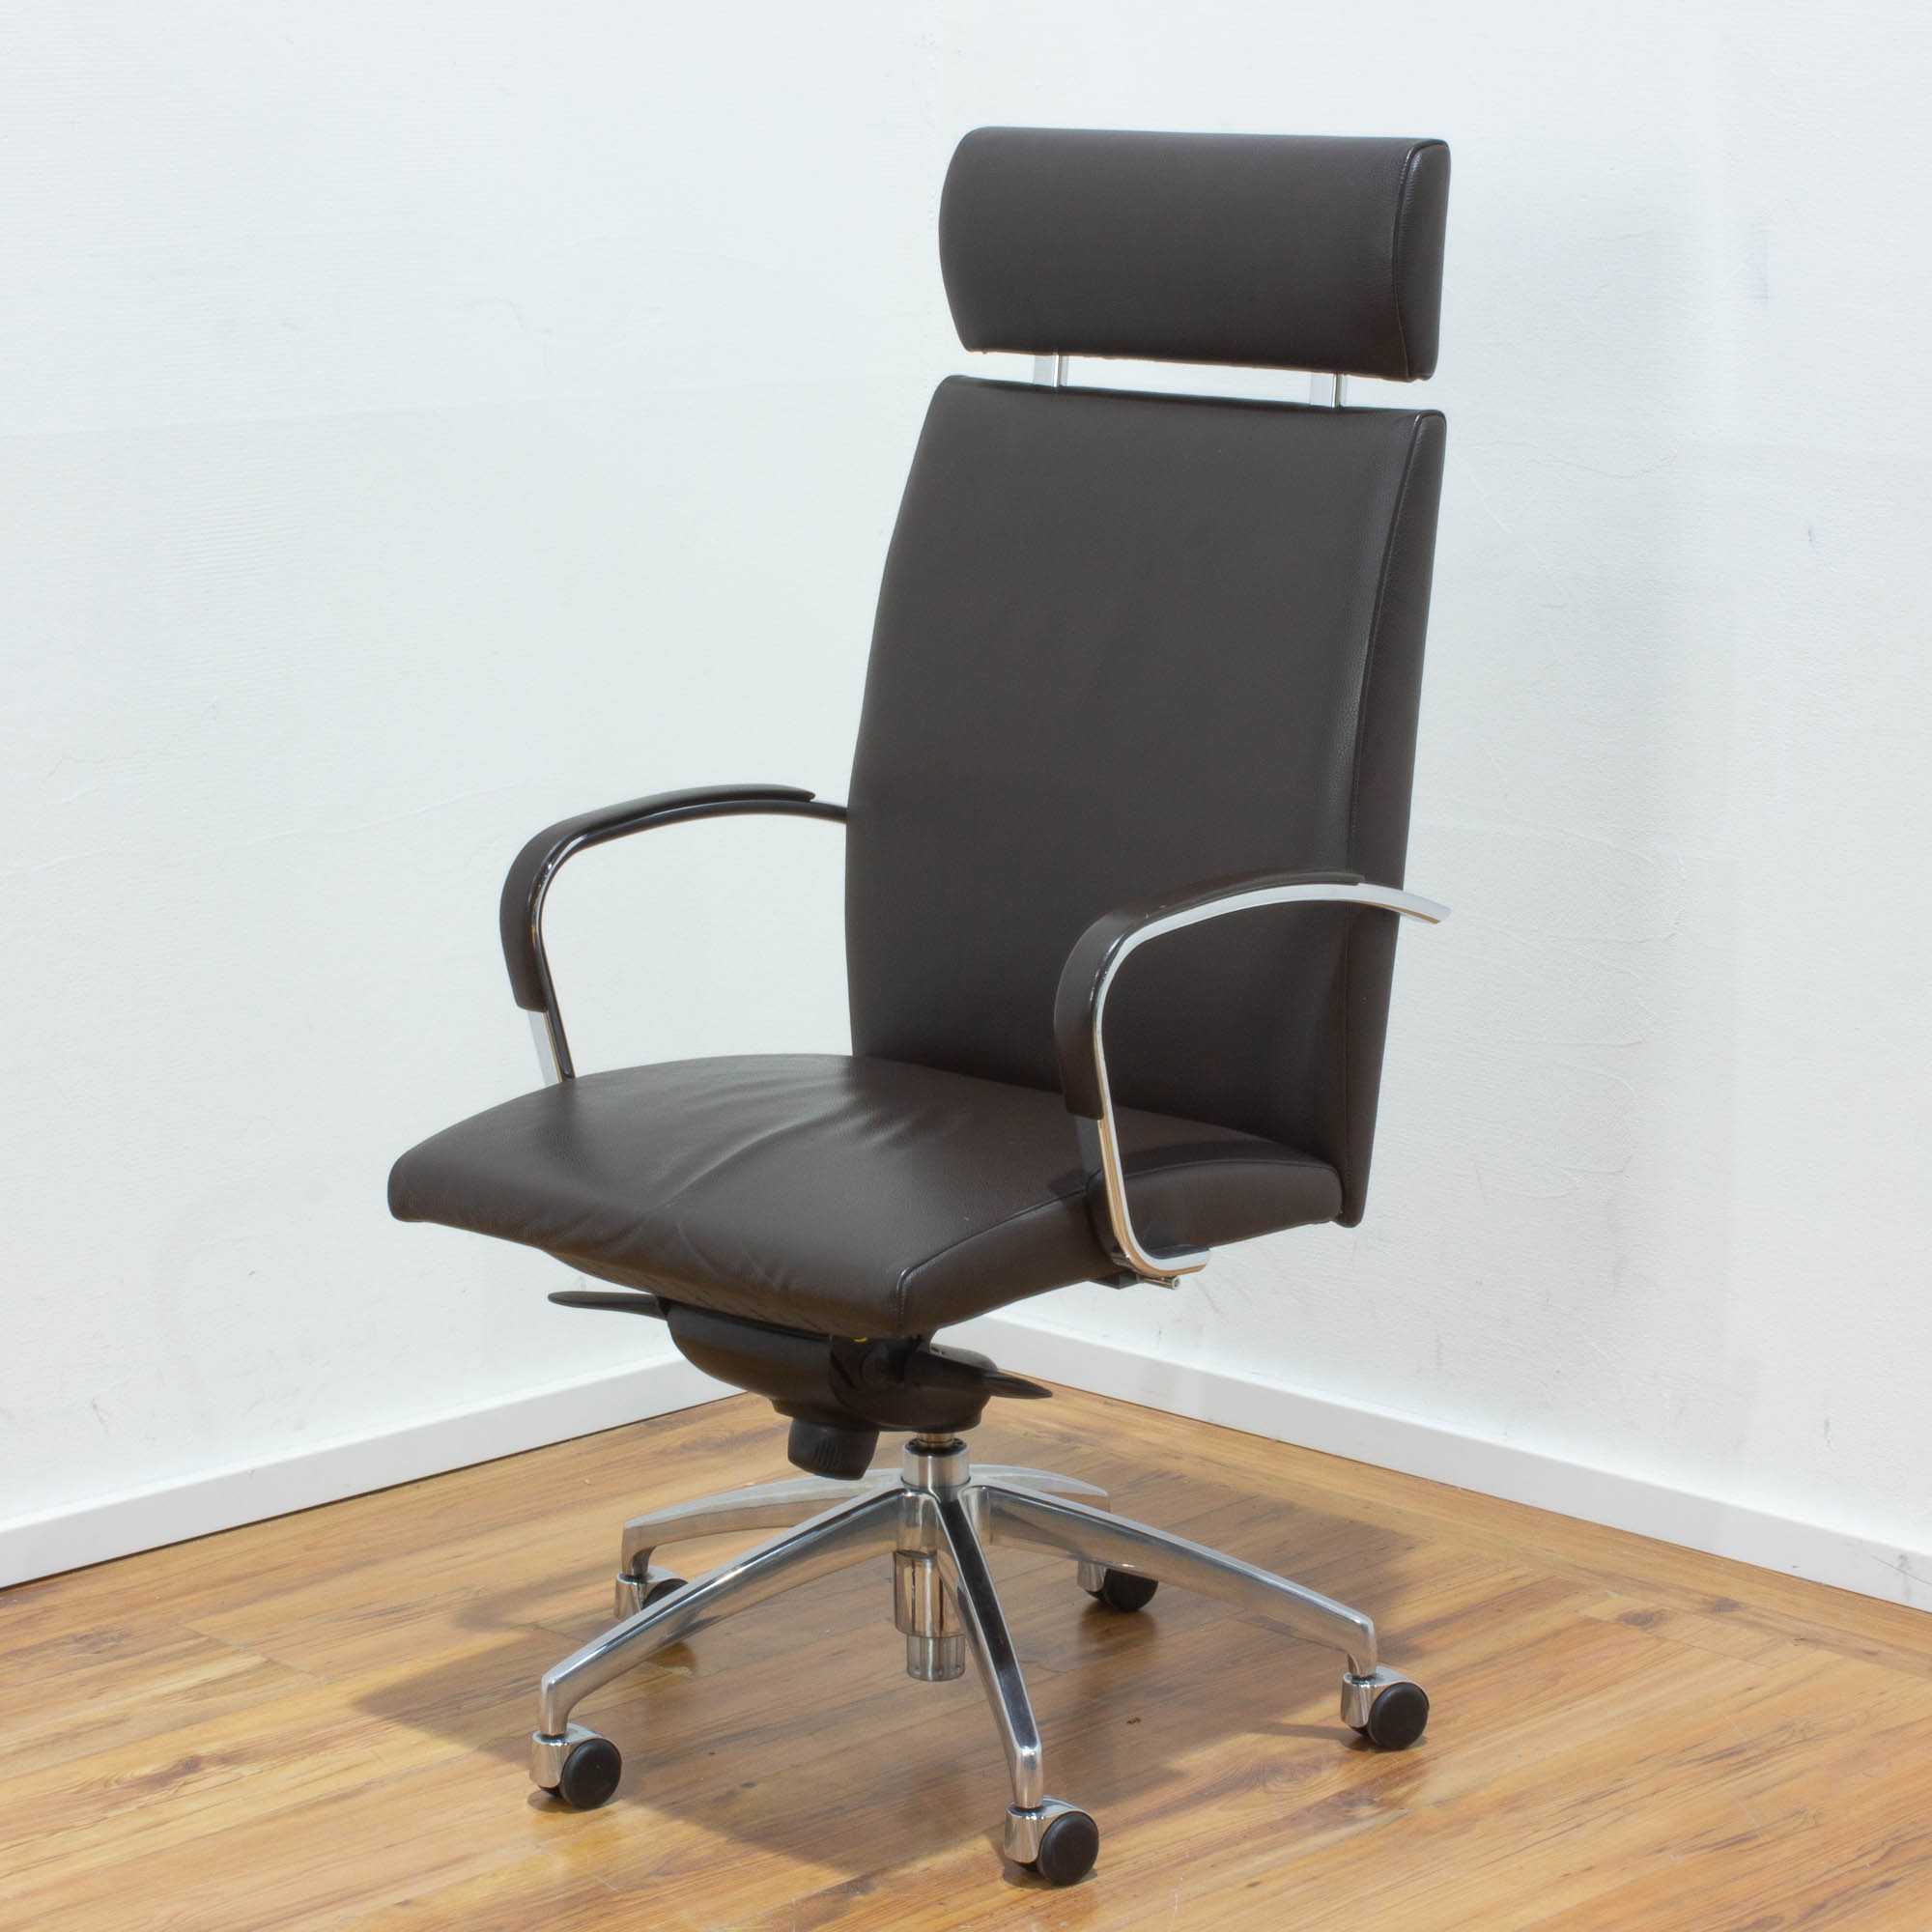 Spiegels "Tano" Office Chair - Leder braun - Gestell chrom